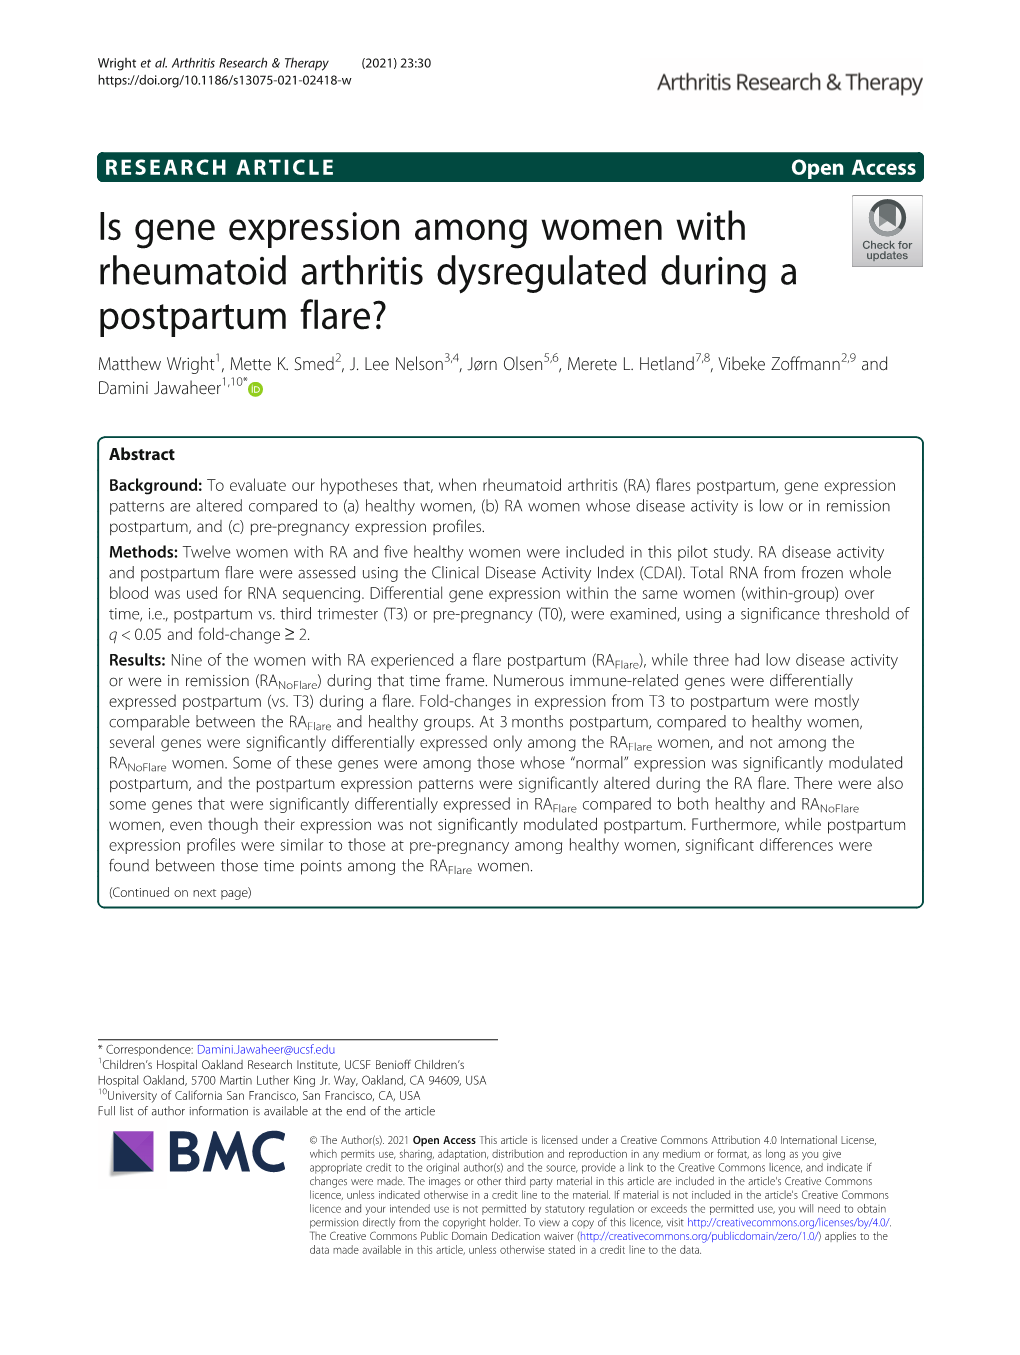 Is Gene Expression Among Women with Rheumatoid Arthritis Dysregulated During a Postpartum Flare? Matthew Wright1, Mette K